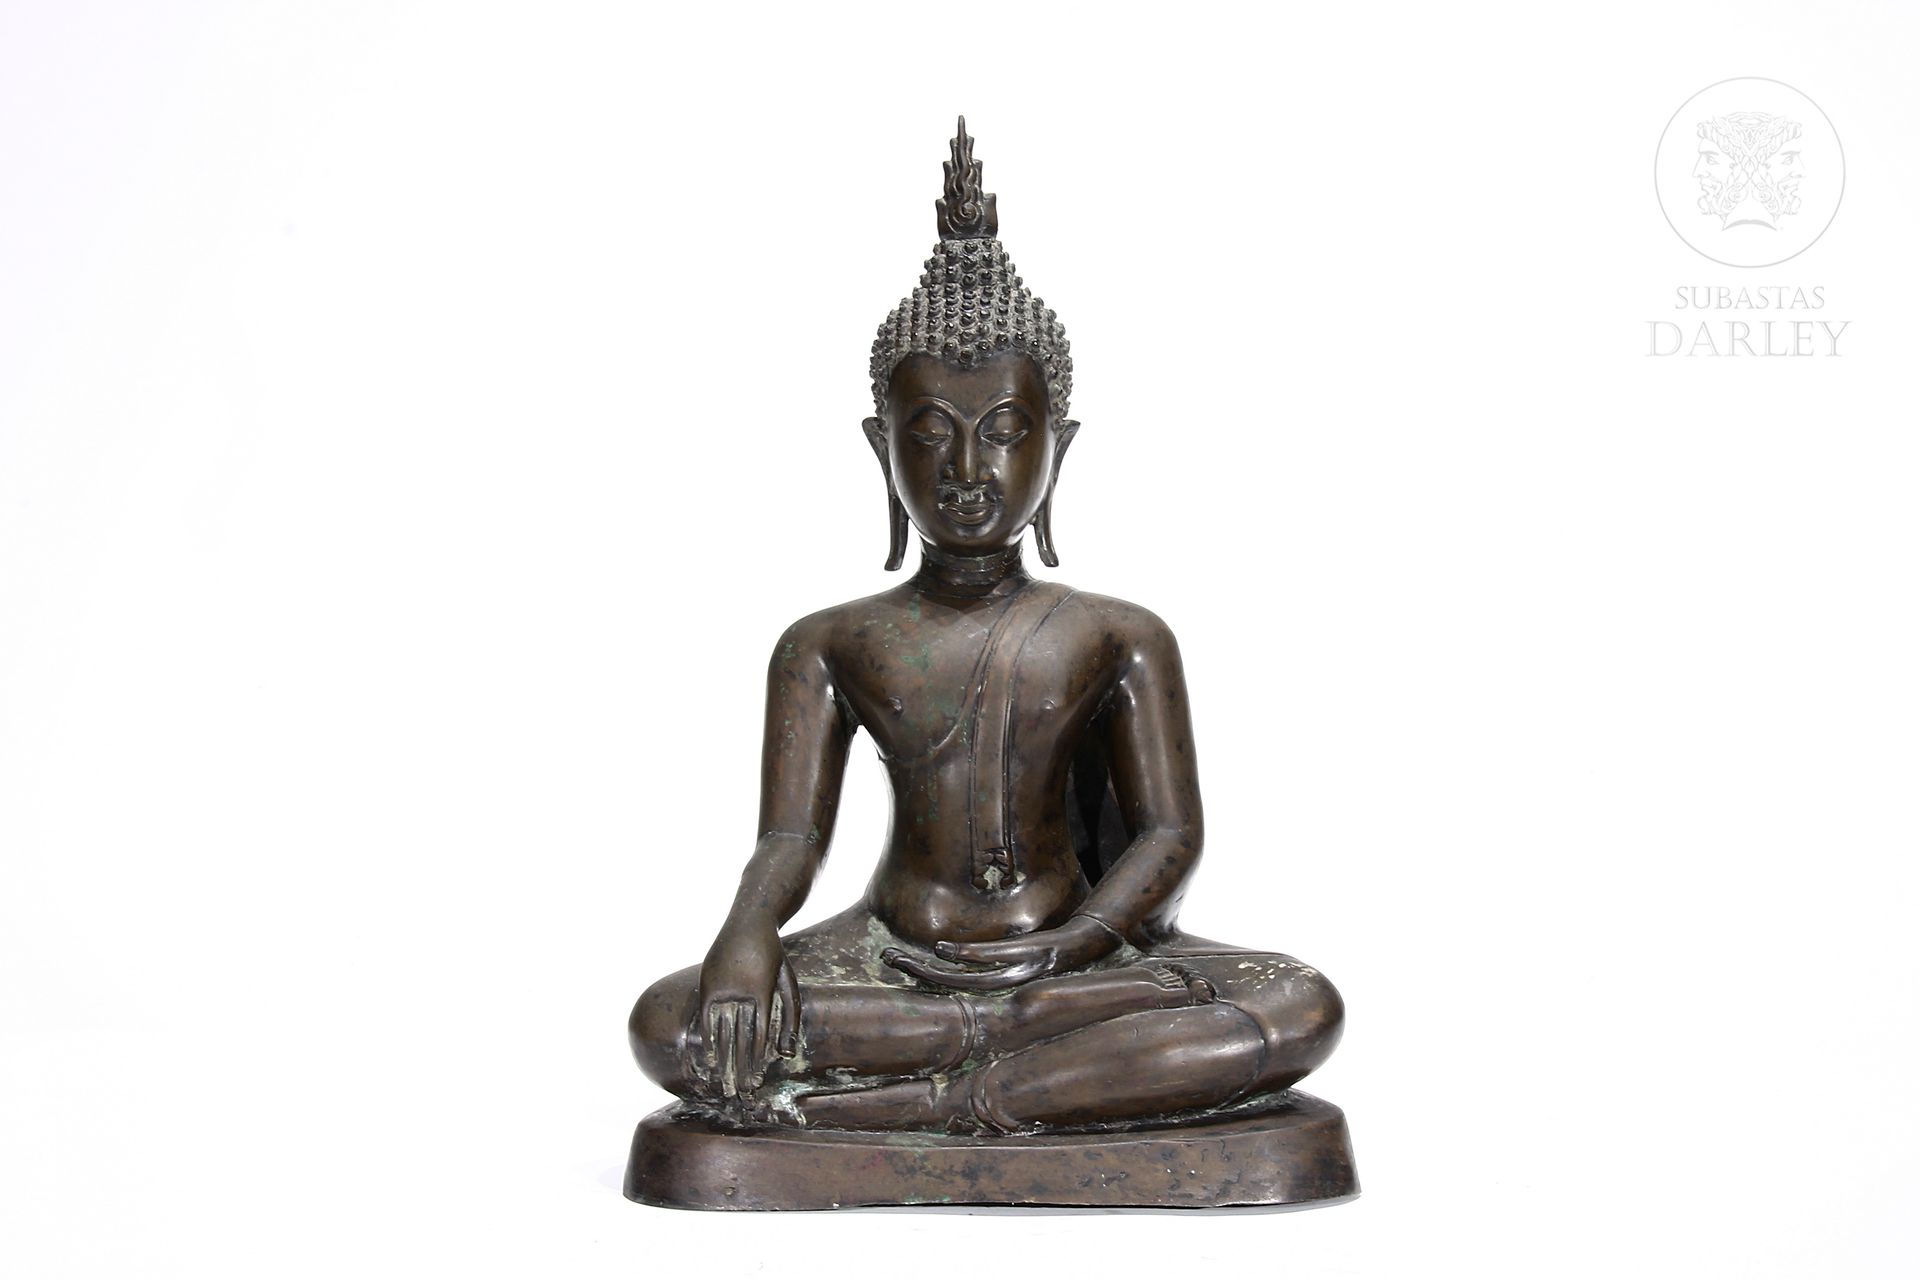 Escultura de “Buddha”, Tailandia, s.XX 
Escultura realizada en bronce. La figura&hellip;